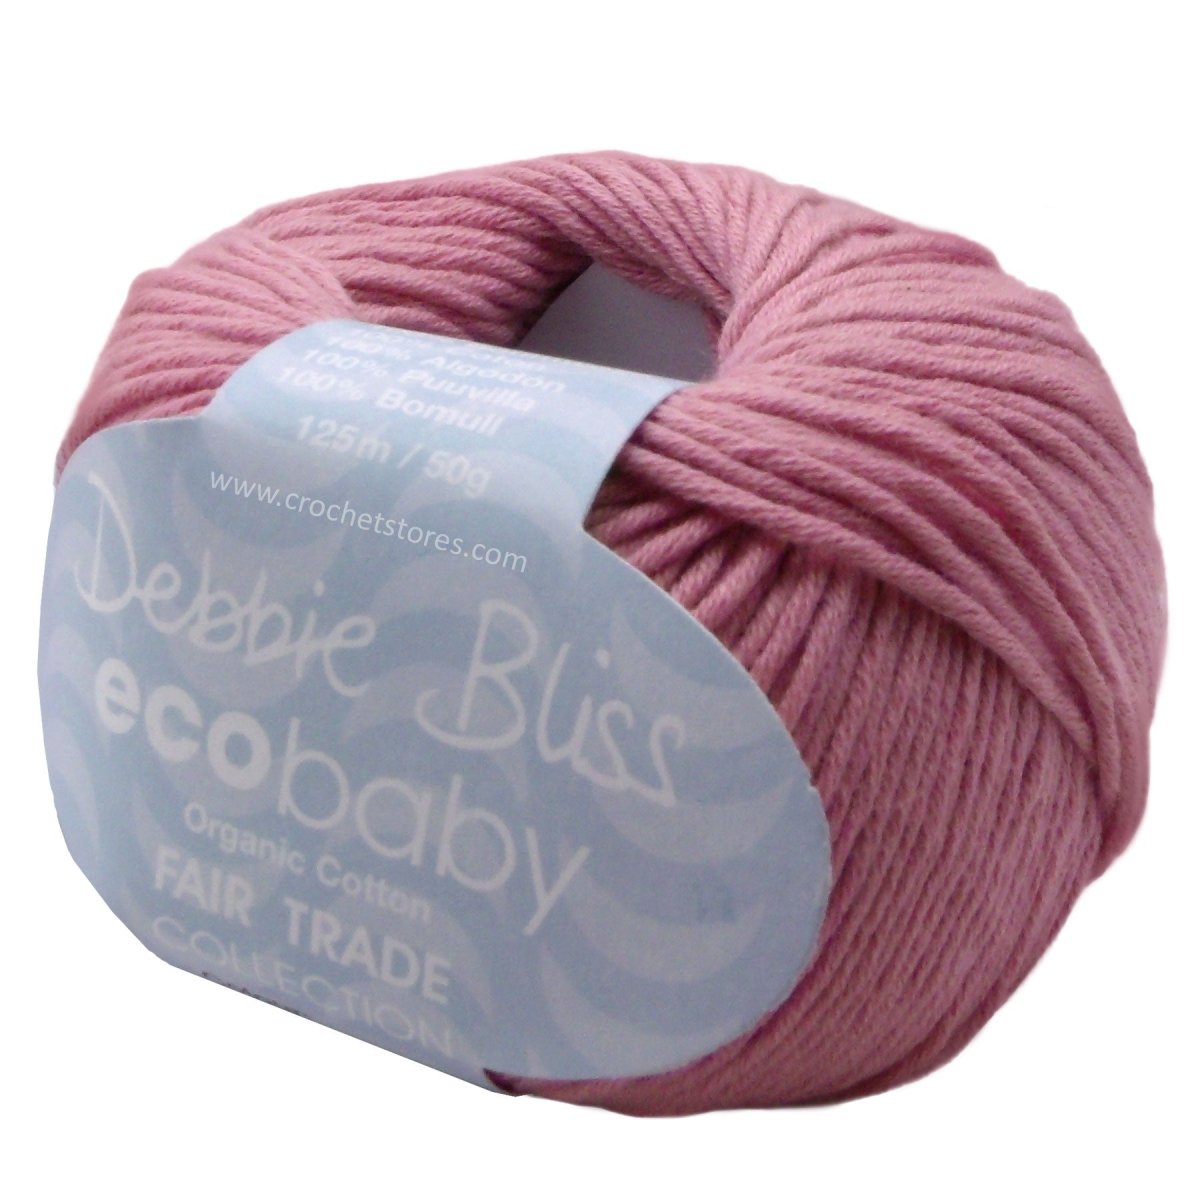 ECO BABY - CrochetstoresDB140278320980140278